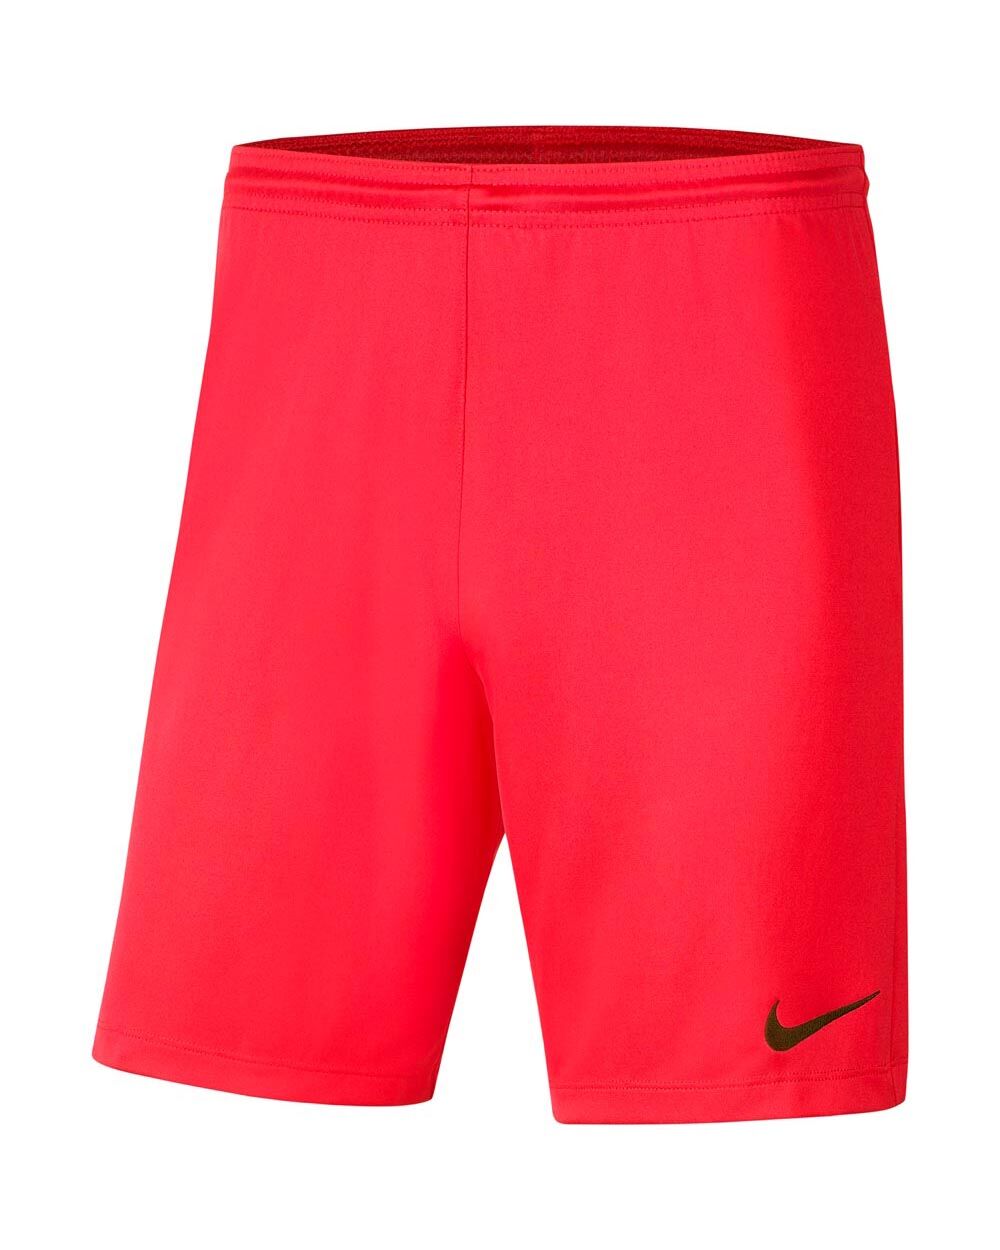 Nike Pantaloncini Park III Rosso Crimson Uomo BV6855-635 M